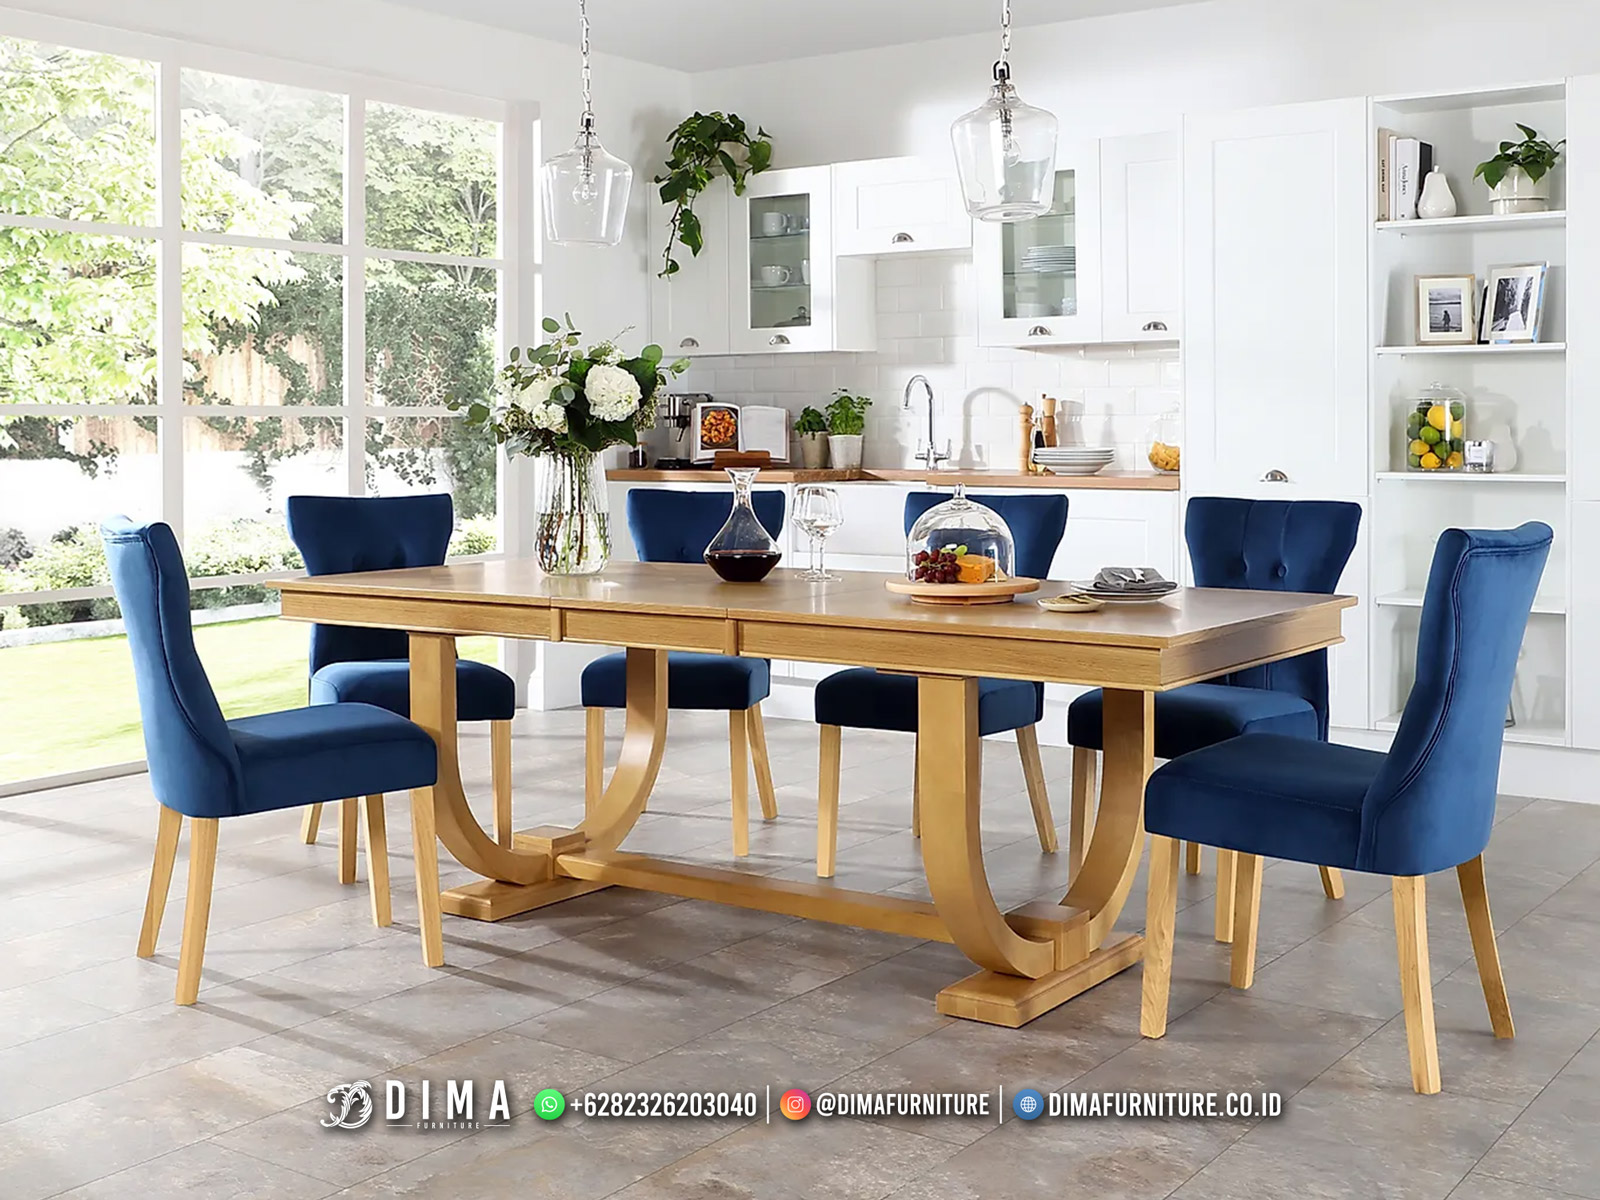 Promo Meja Makan Minimalis Modern Furniture Kota Jakarta 33MJ